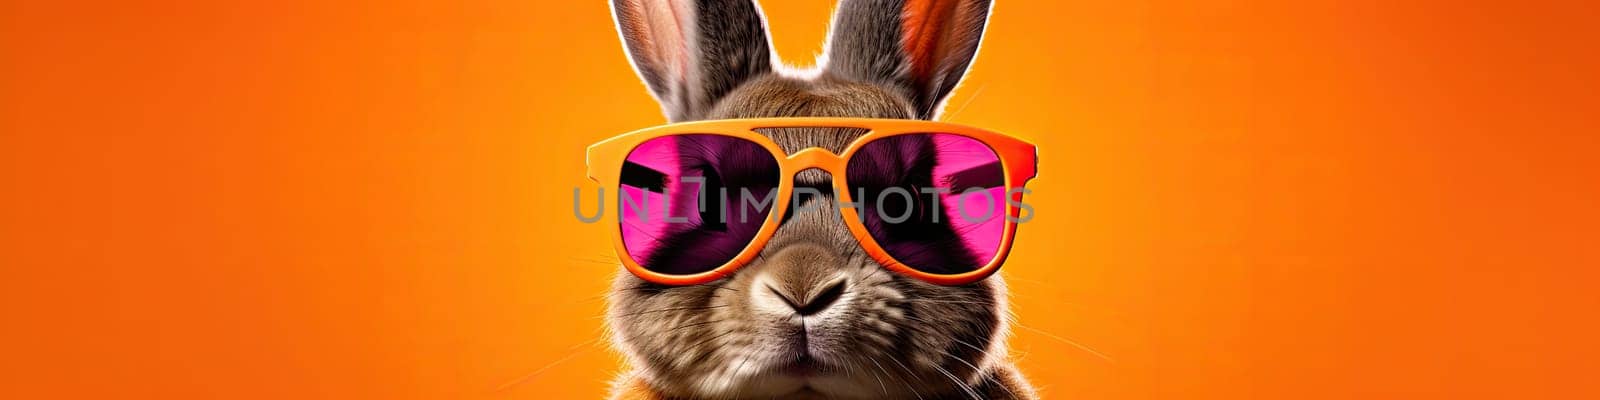 Rabbit wearing pink sunglasses isolated on the sun orange background by Kadula